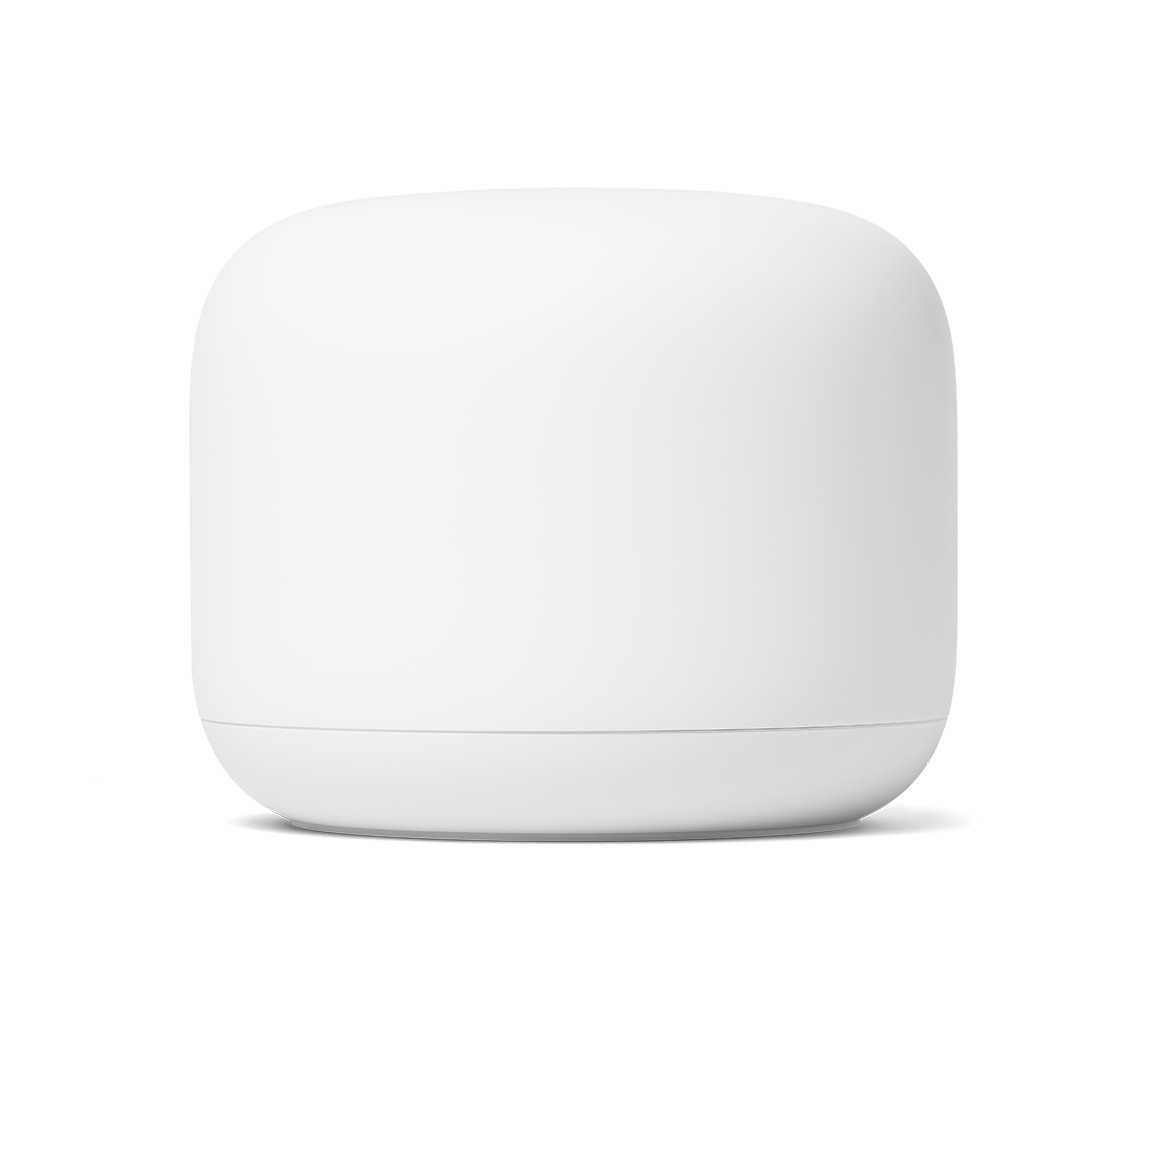 Google Nest Wifi - WLAN-Router